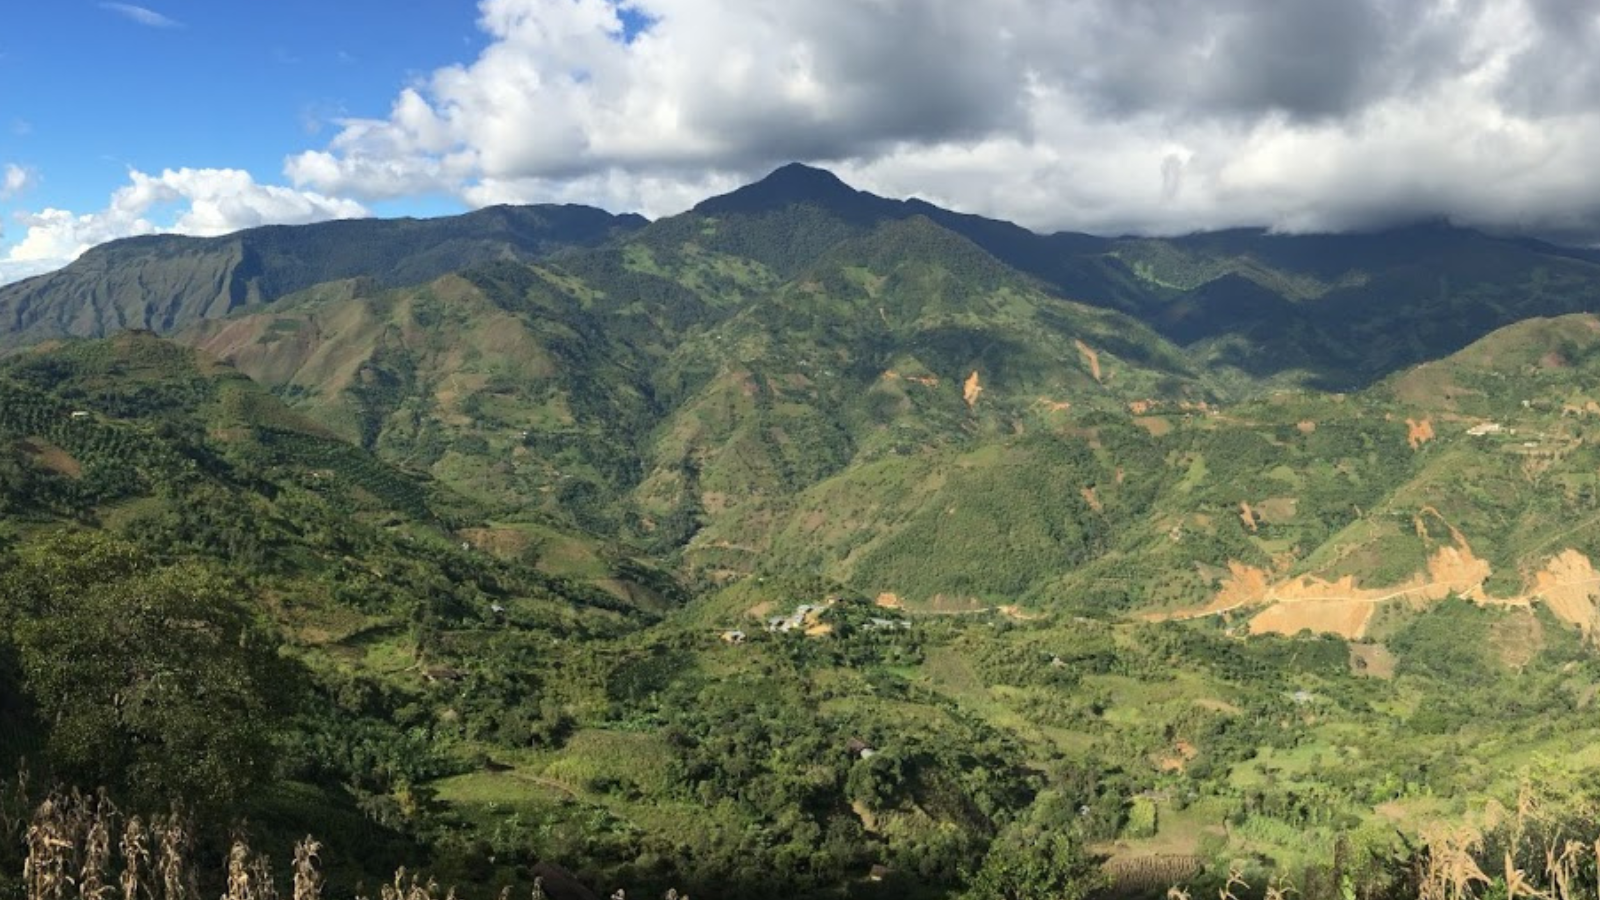 Peru mountain vista and coffee farms